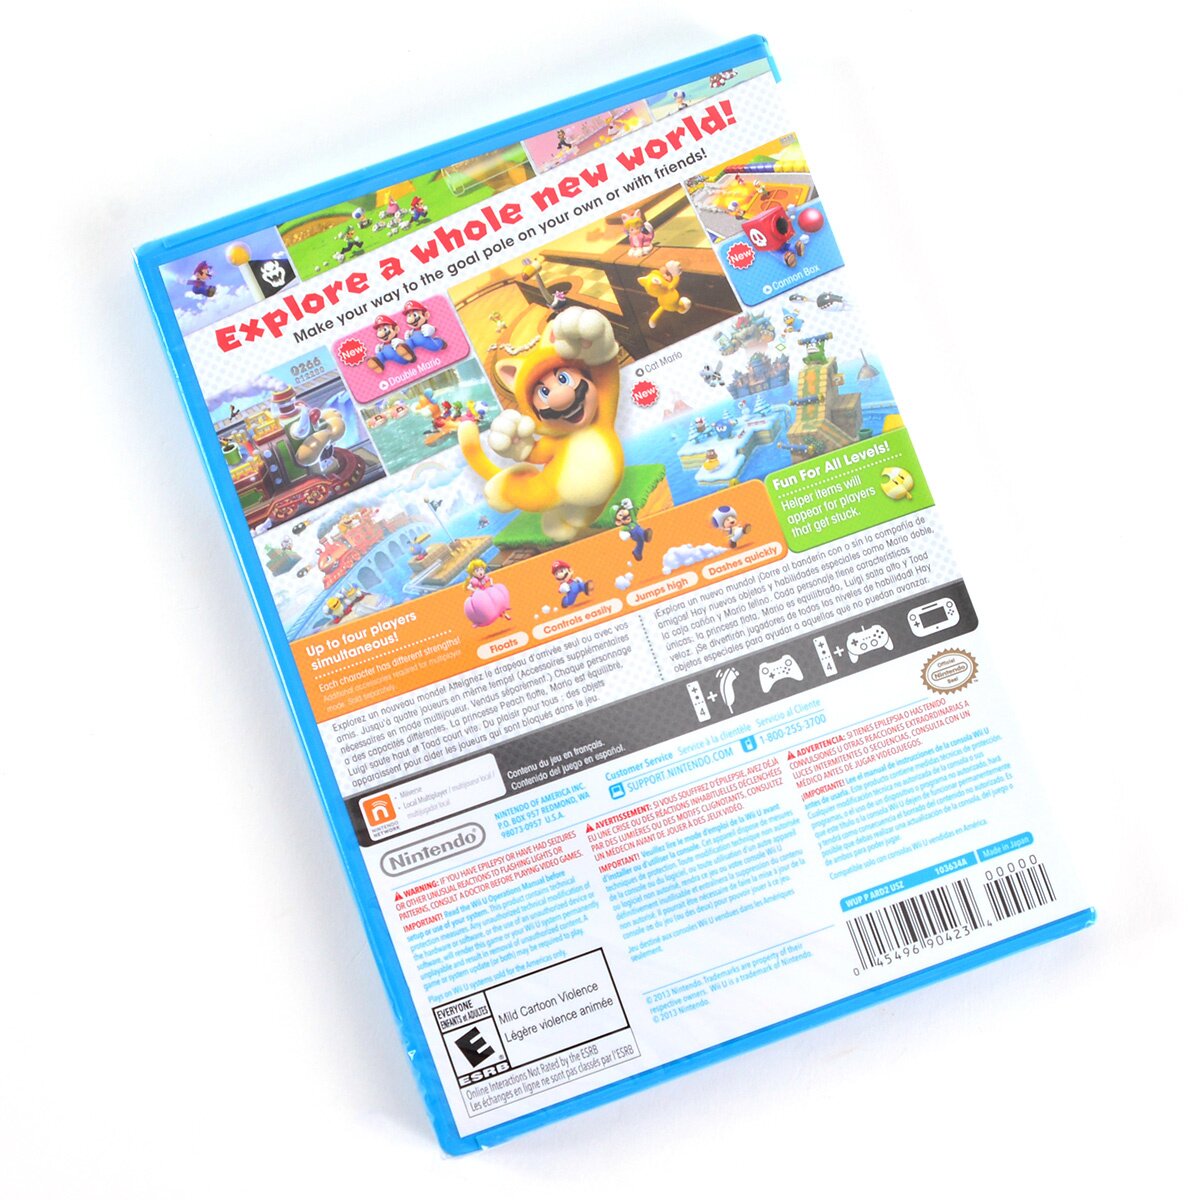 Super Mario 3D World (Nintendo Wii U, 2013) for sale online